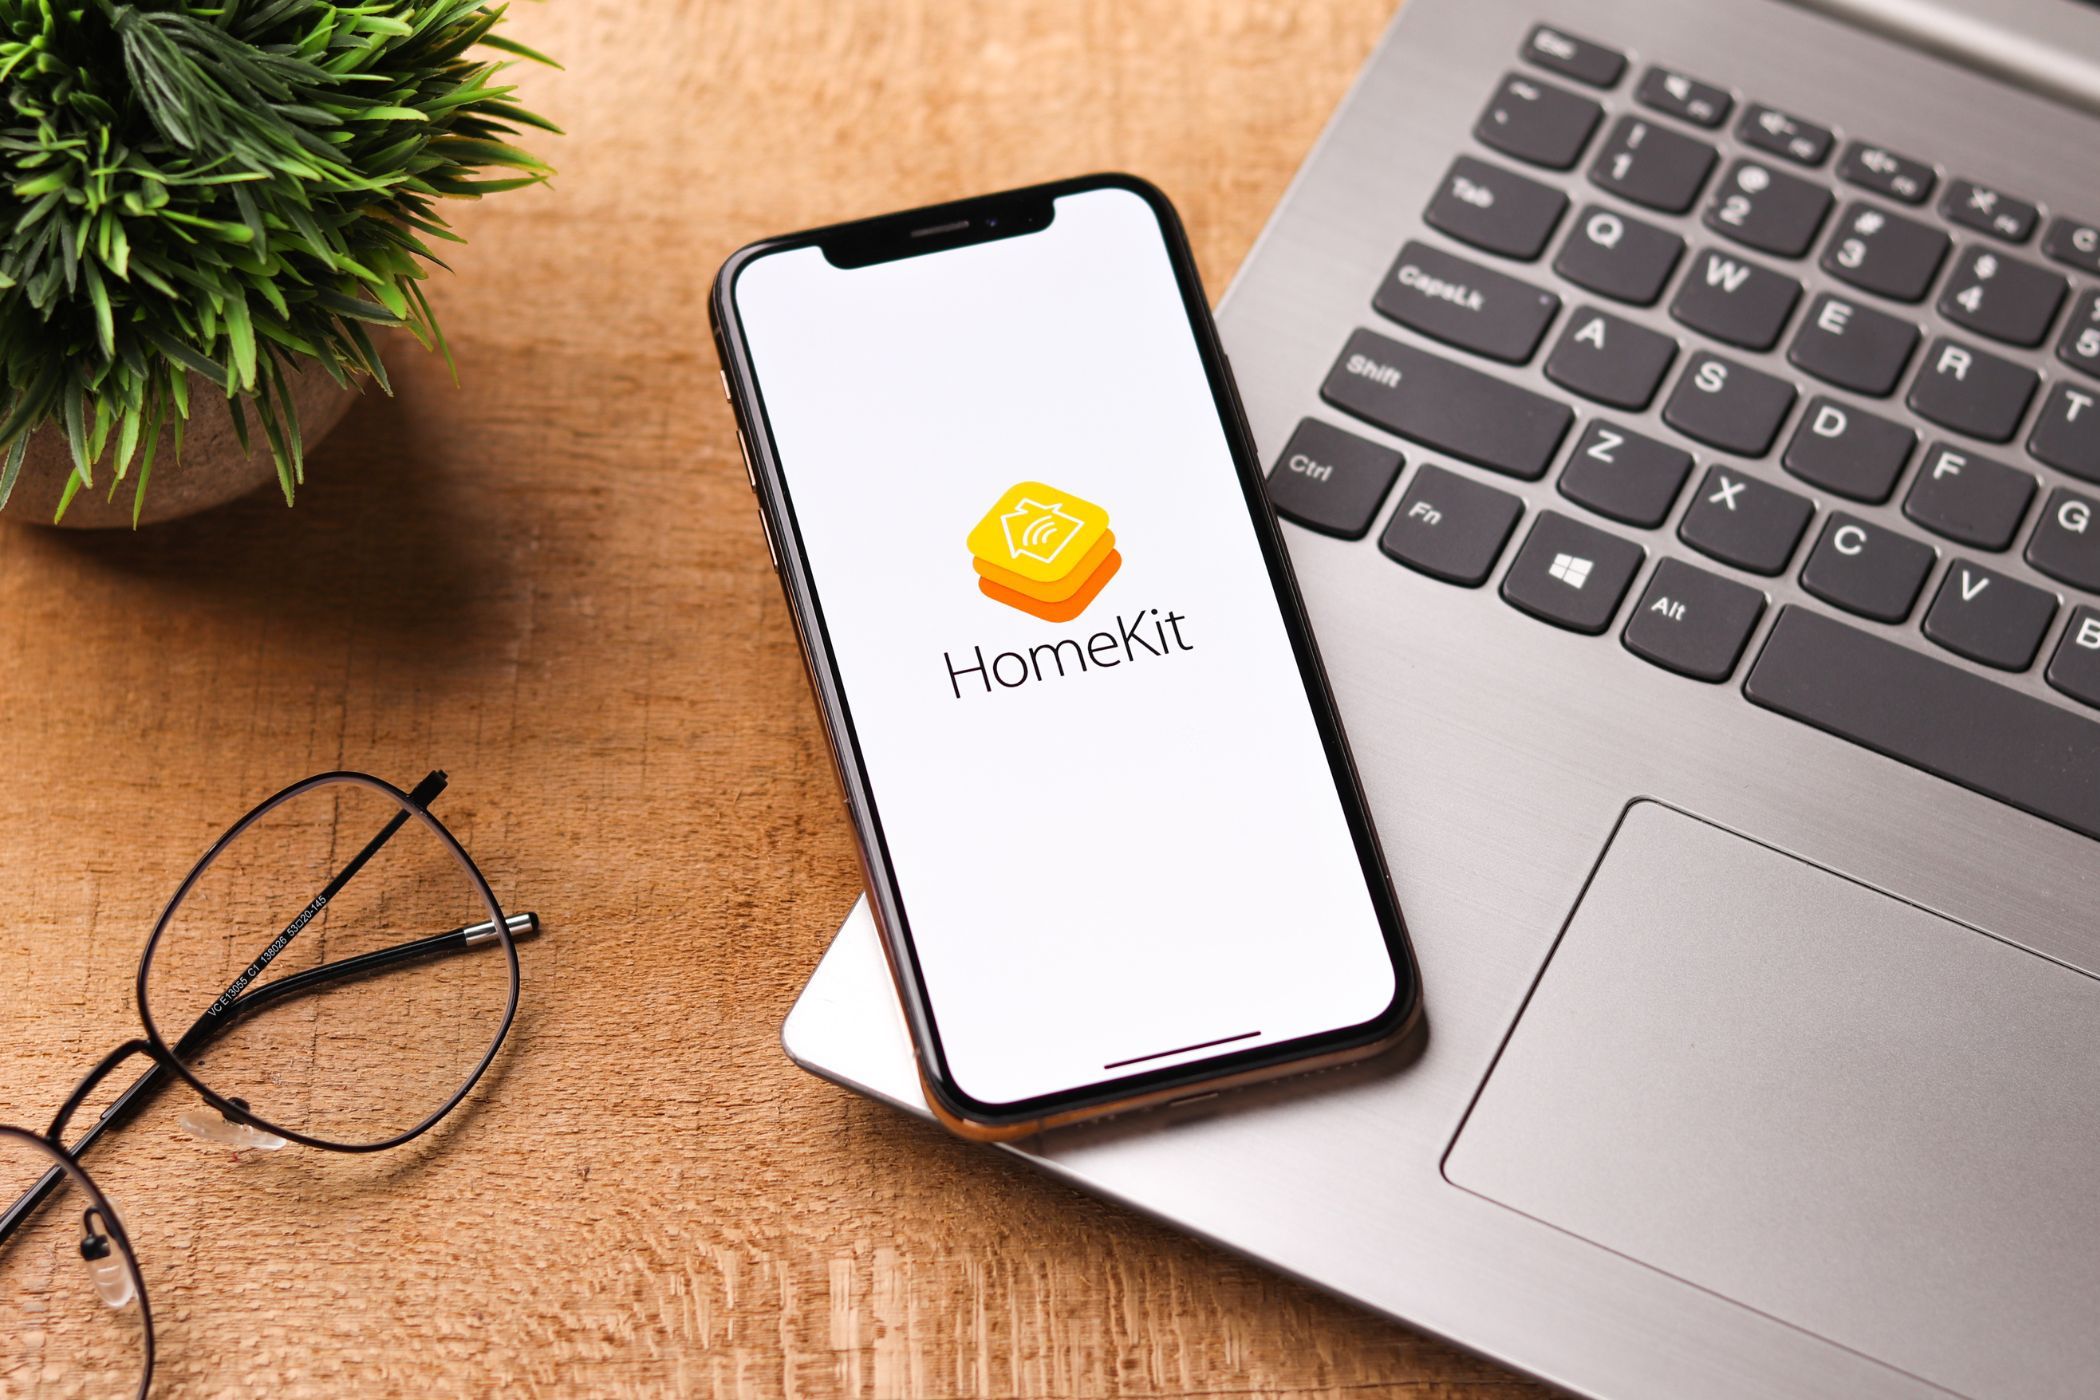 the apple homekit logo on a smartphone